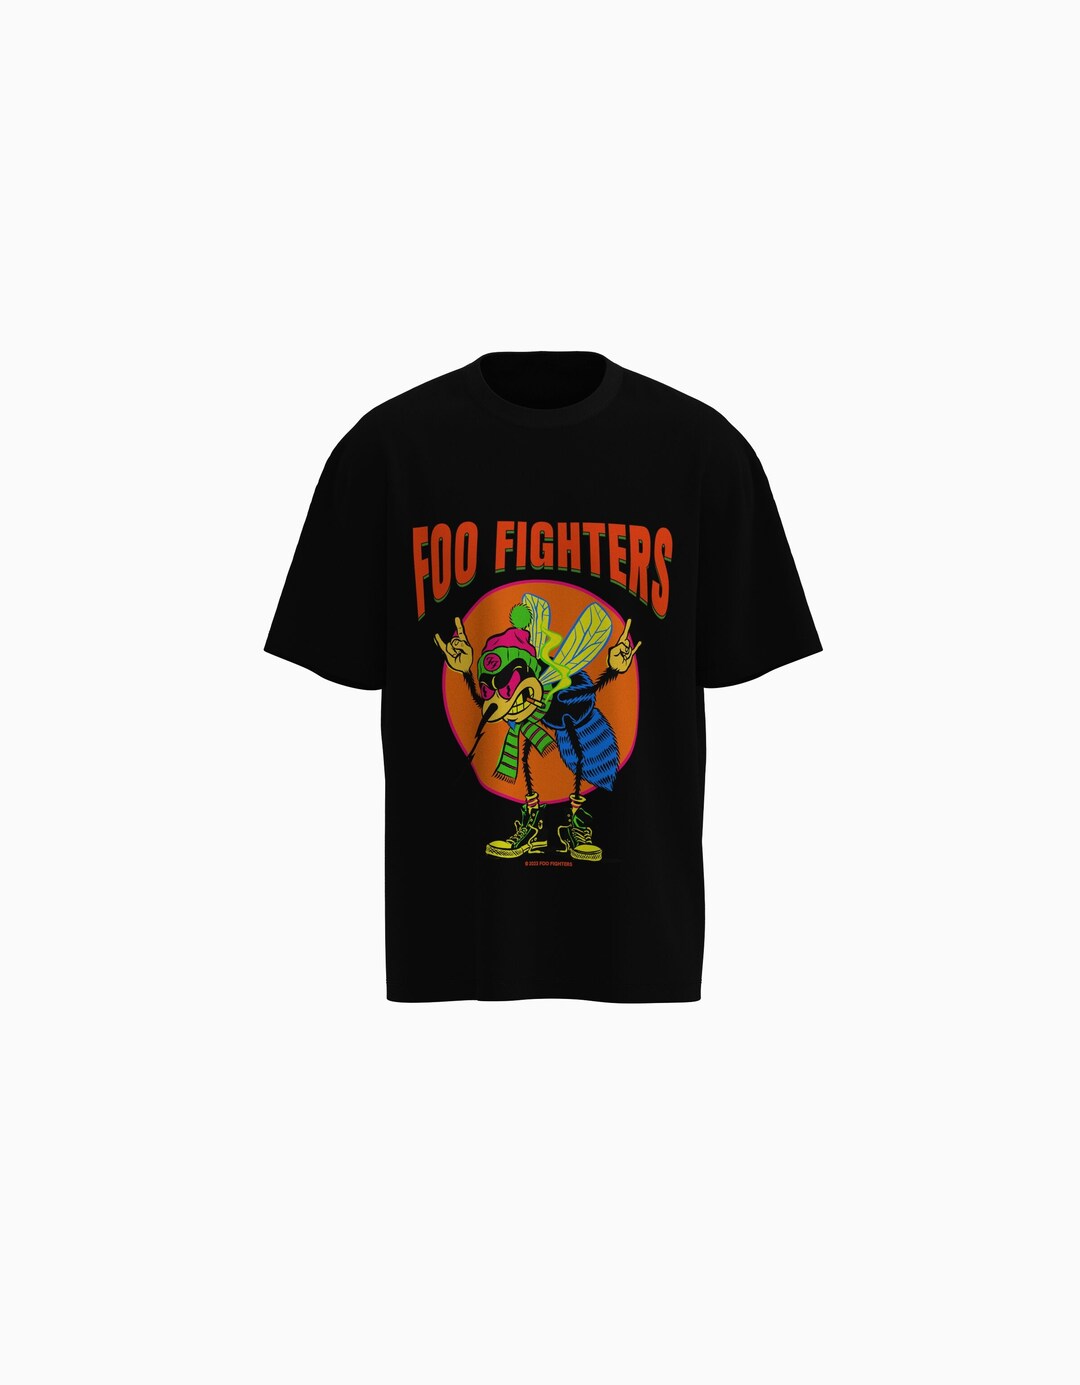 Foo Fighters print estanpatudun kamiseta mahuka-motza, boxy fit